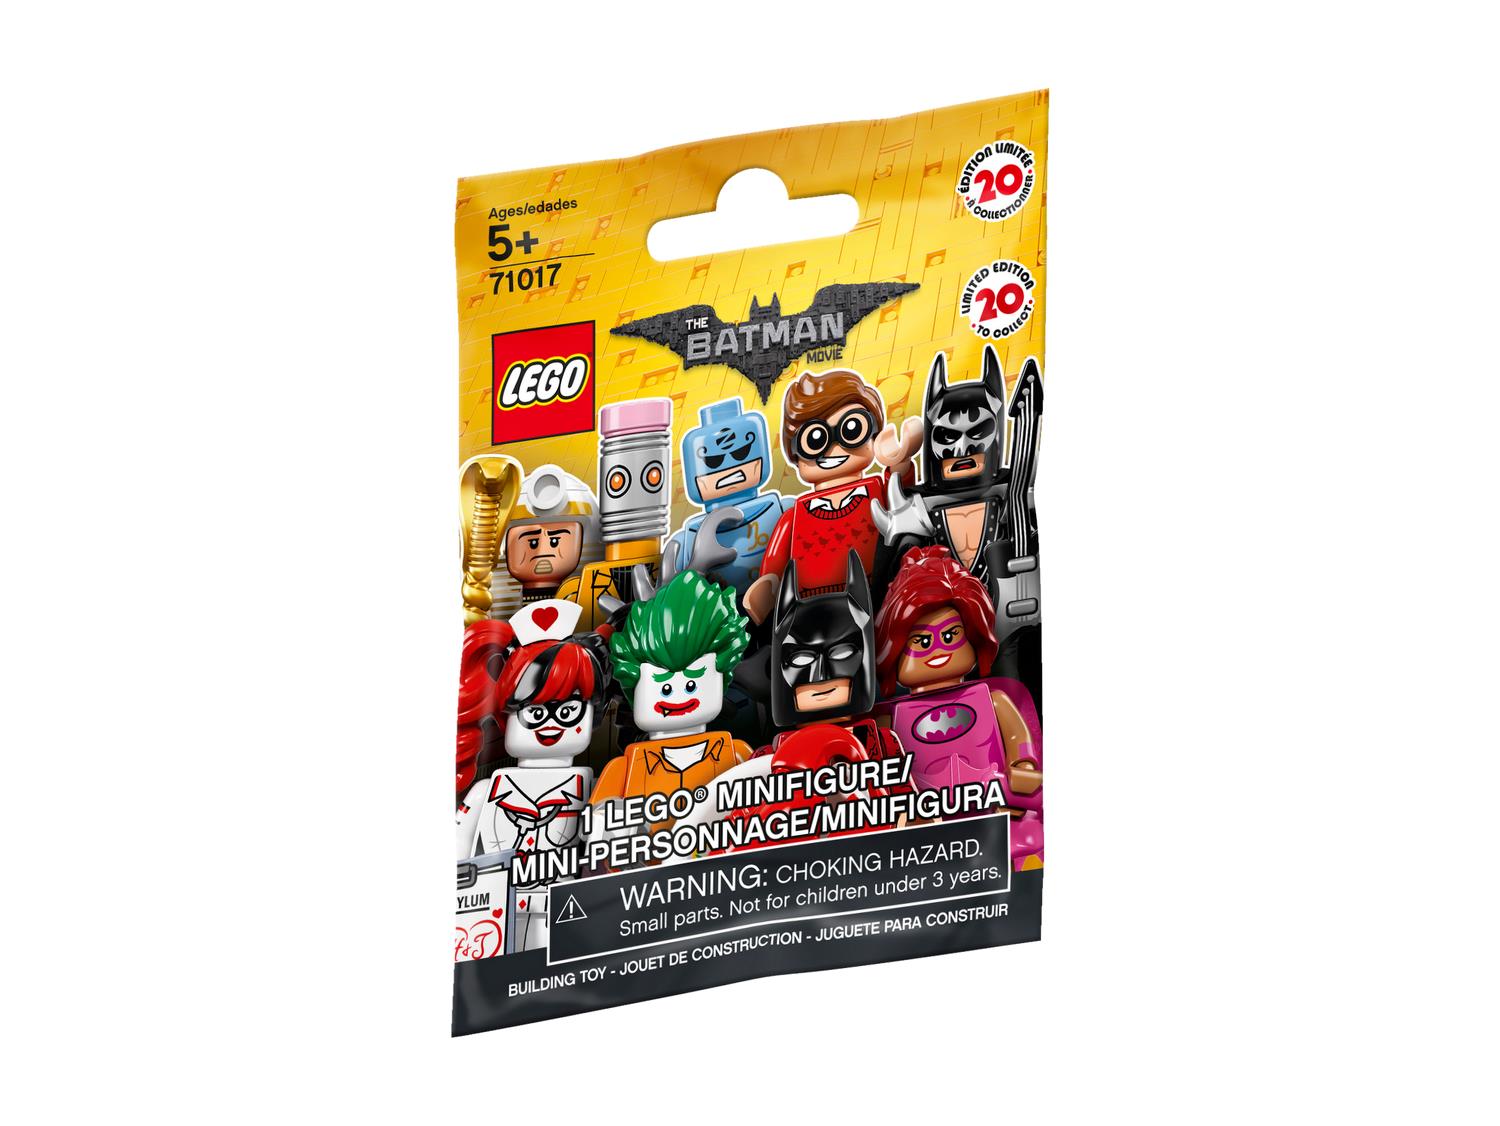 Catman Factory Sealed! 71017 LEGO MINIFIGURES -THE BATMAN MOVIE 